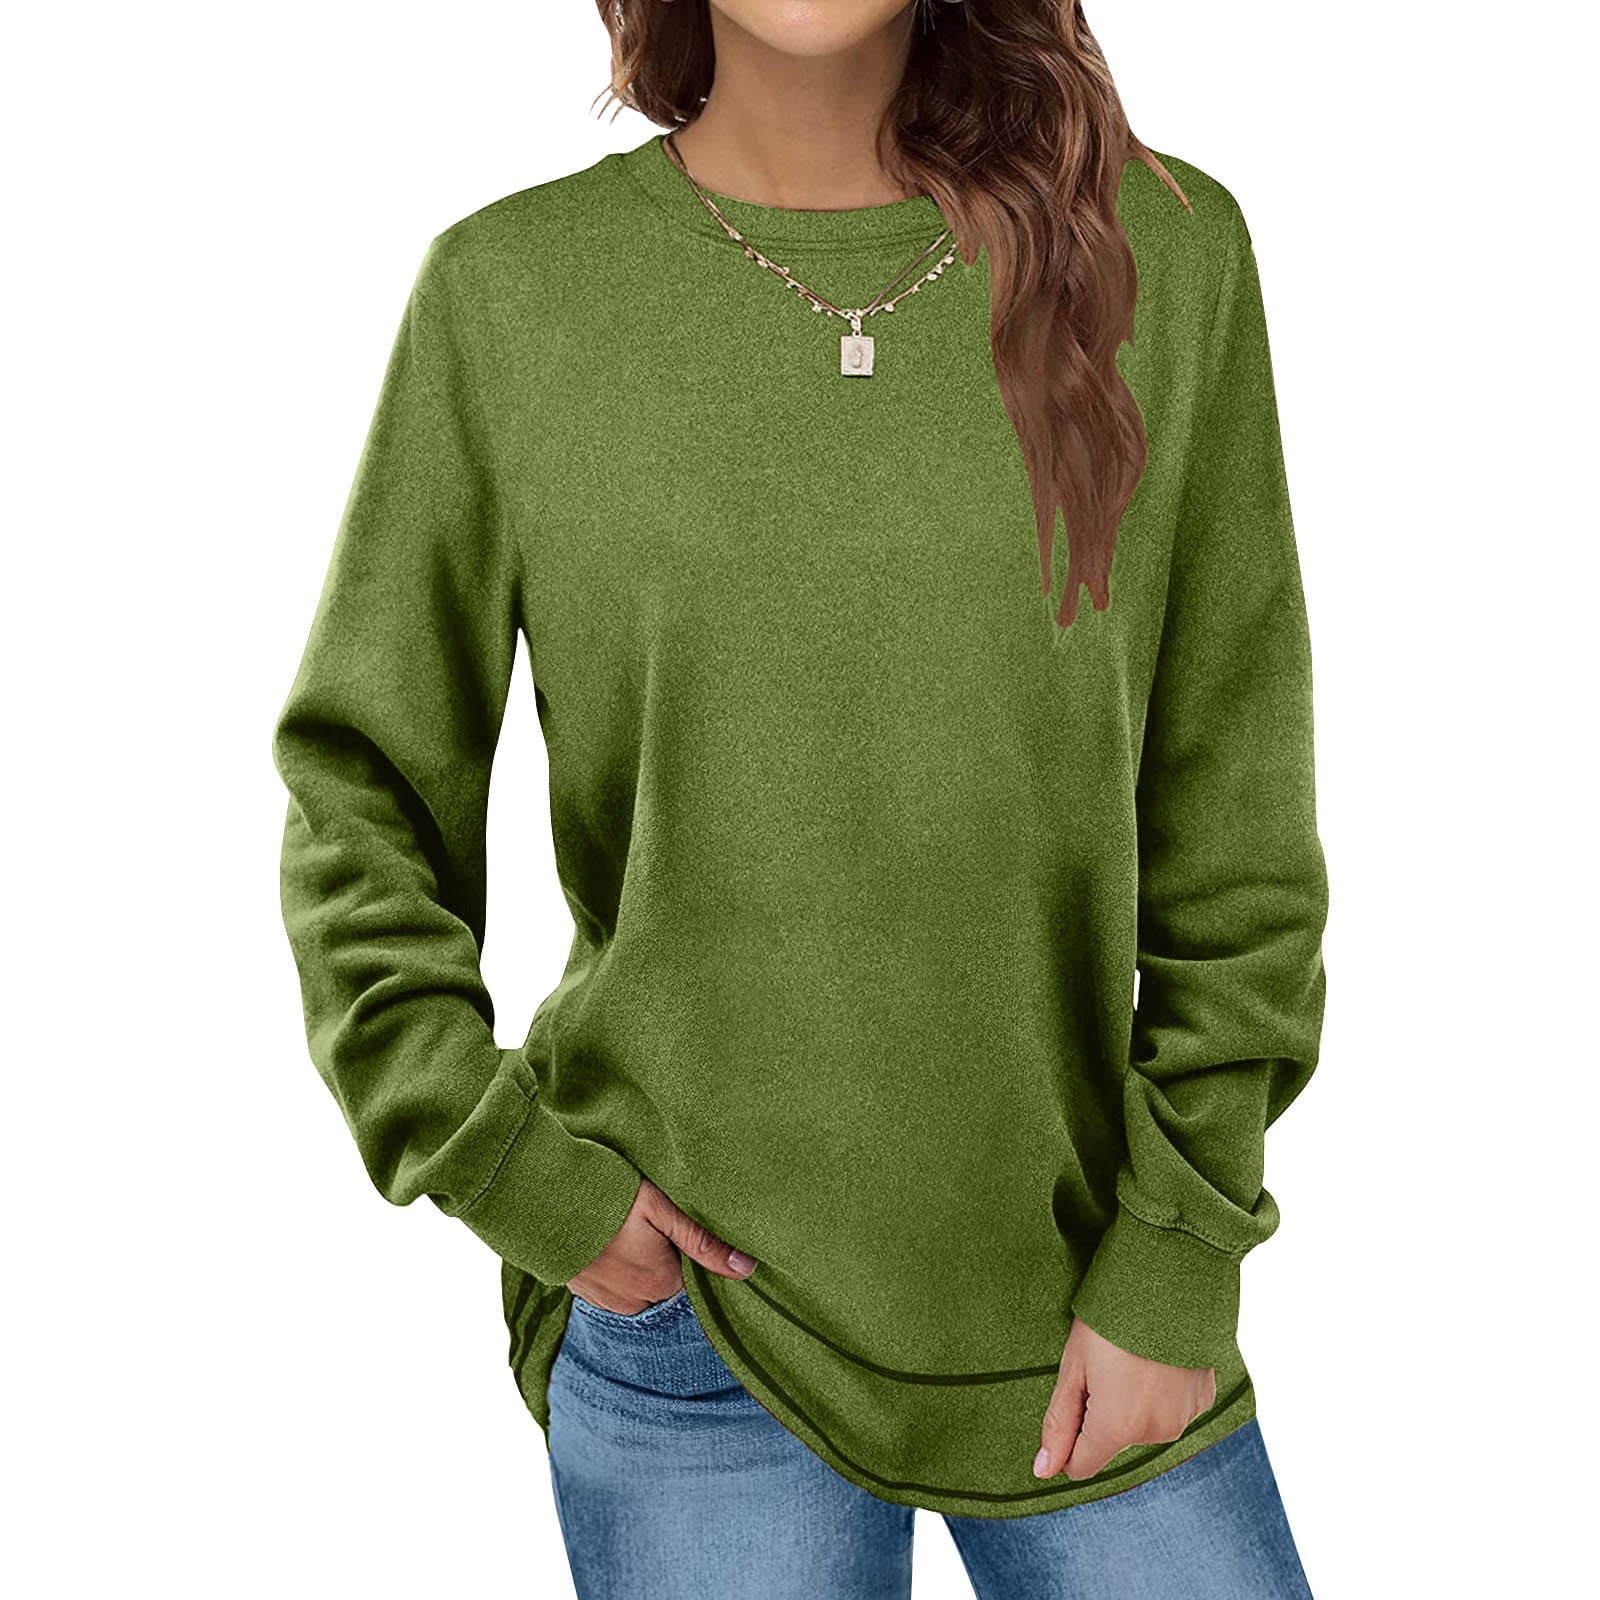 RQYYD Long Sleeve Crewneck Fleece Sweatshirt for Women Casual Solid Pullover Tops Fall Winter Tunic Army Green S - Walmart.com